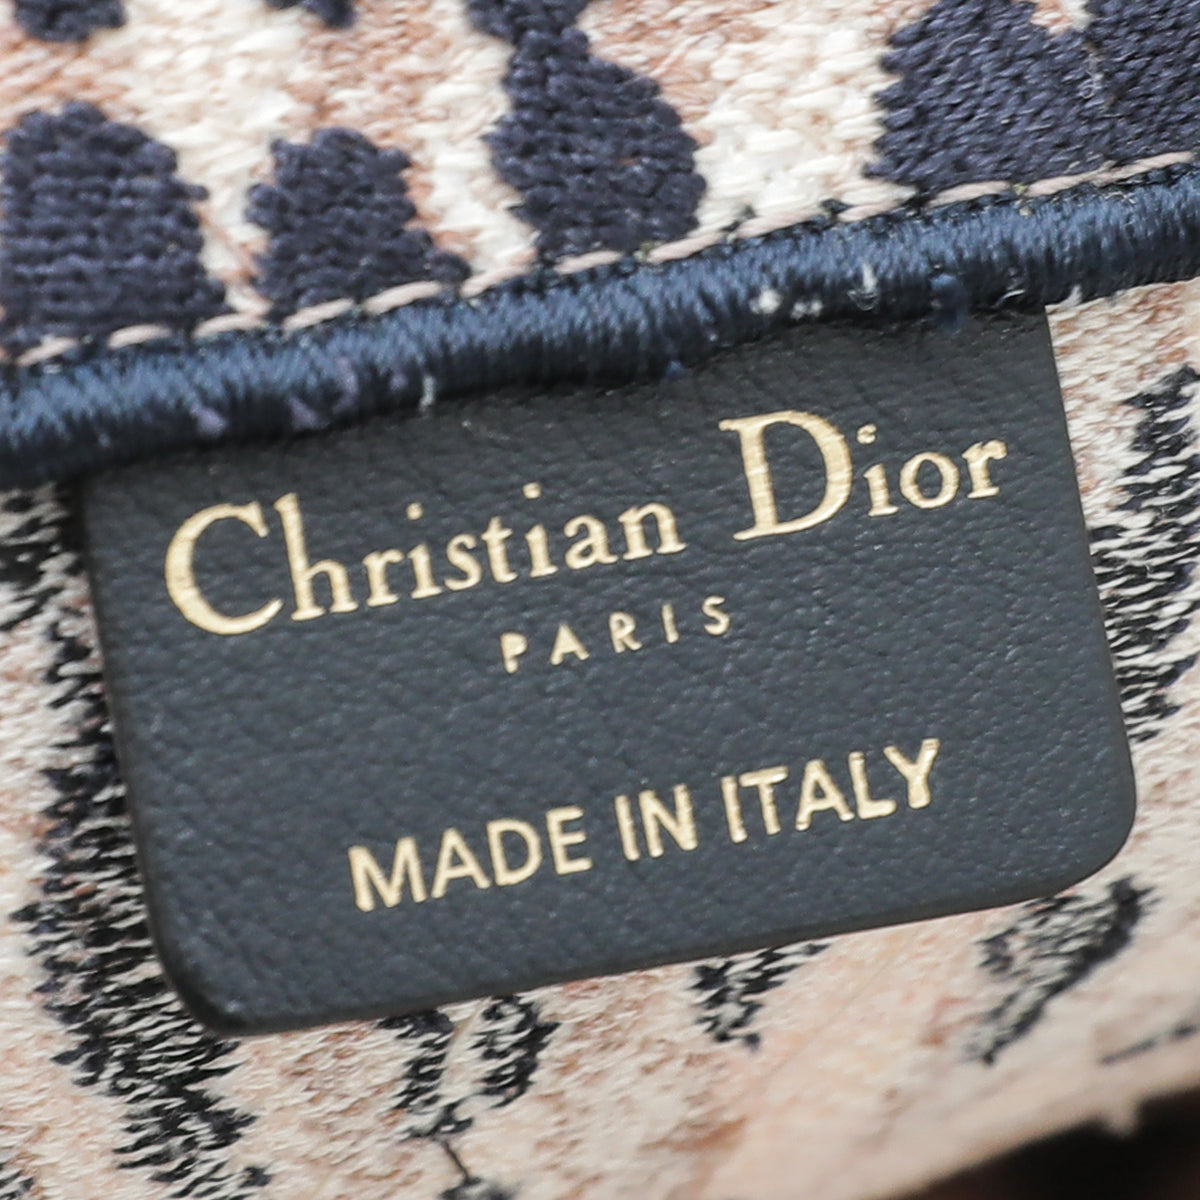 Christian Dior Multicolor Tie Dye Book Tote Large Bag